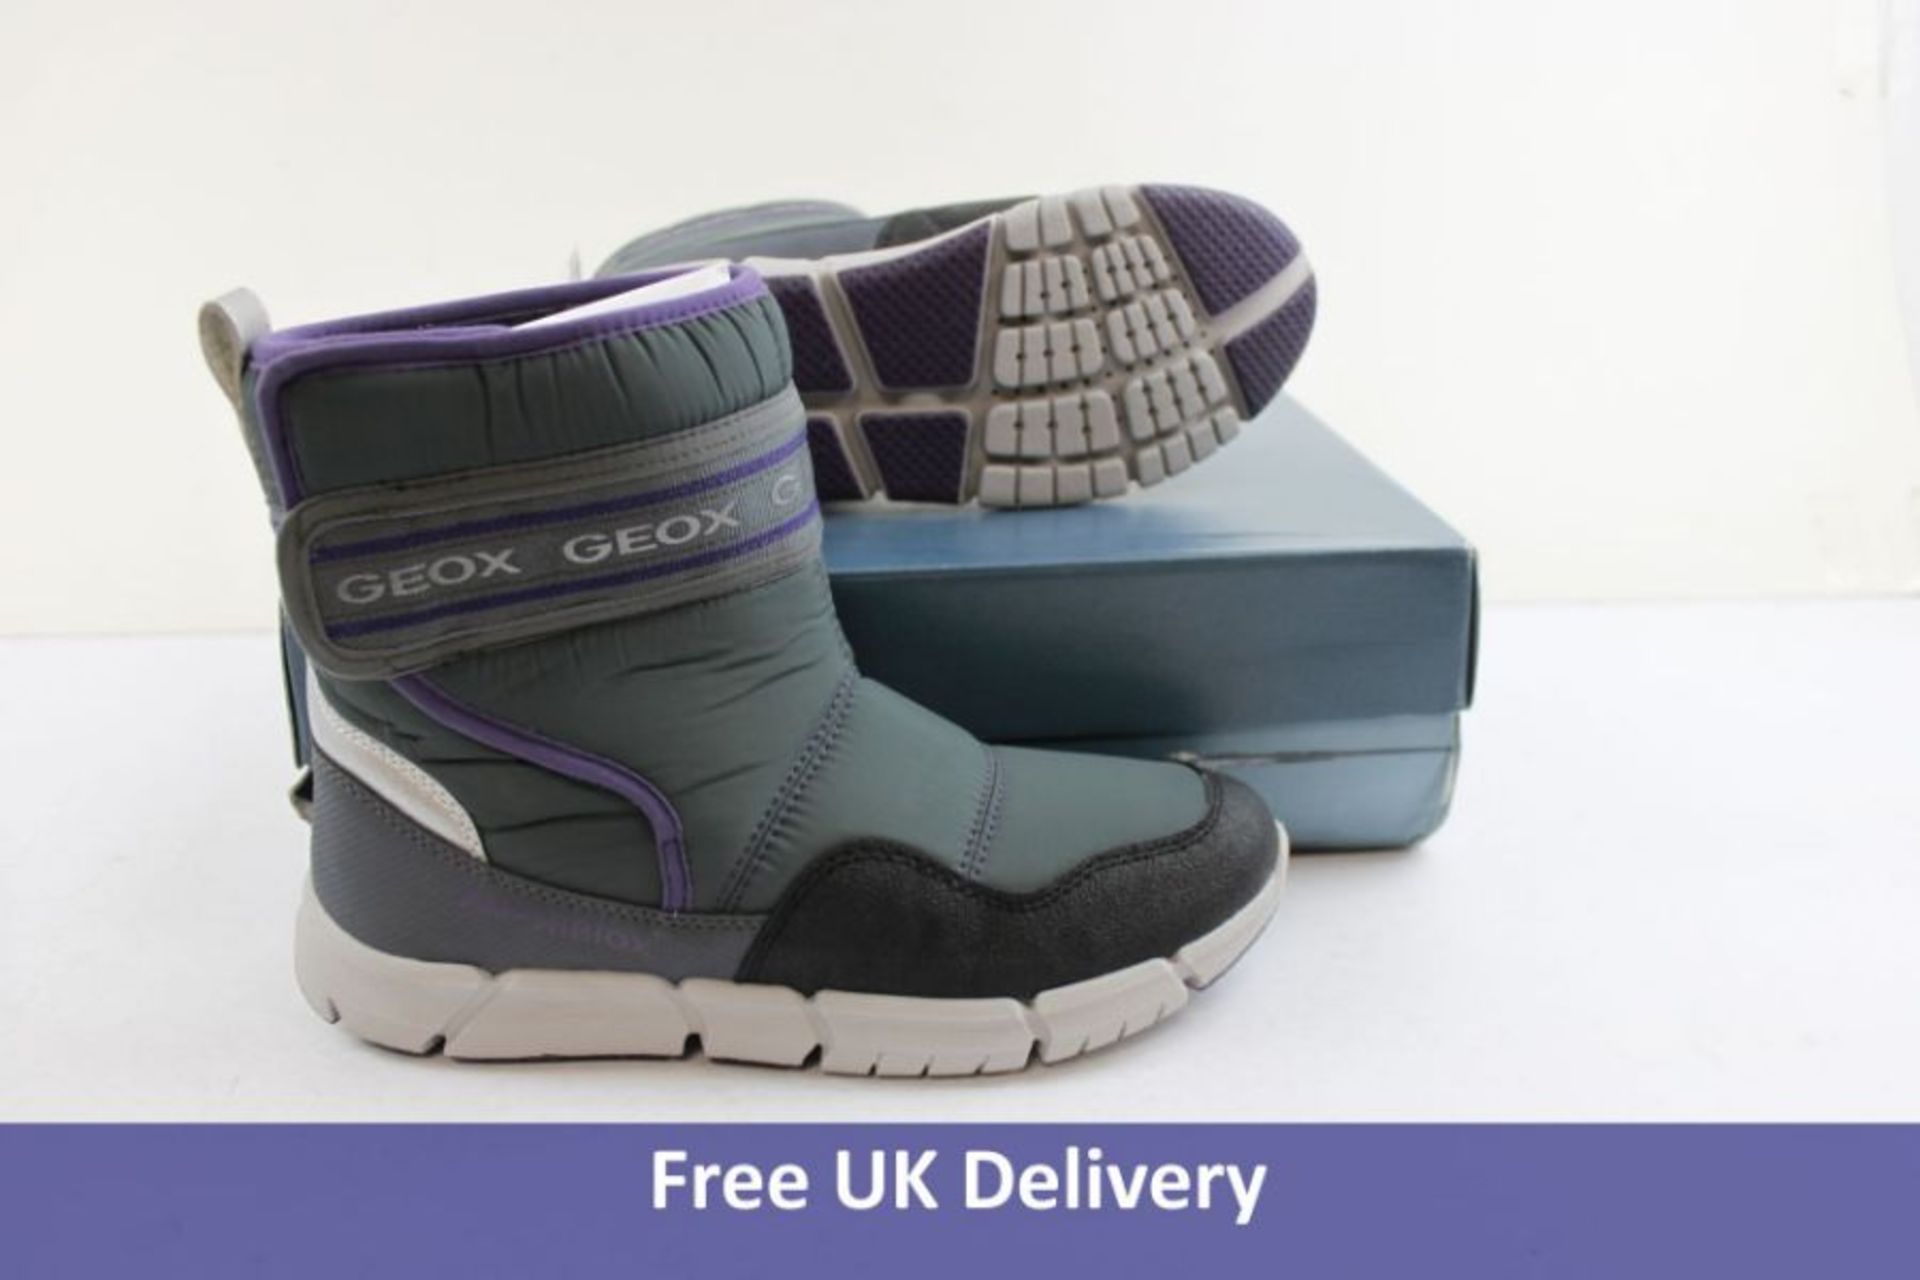 Geox Amphibiox Kids J Flexyper G Boots, Grey and Purple, UK 3